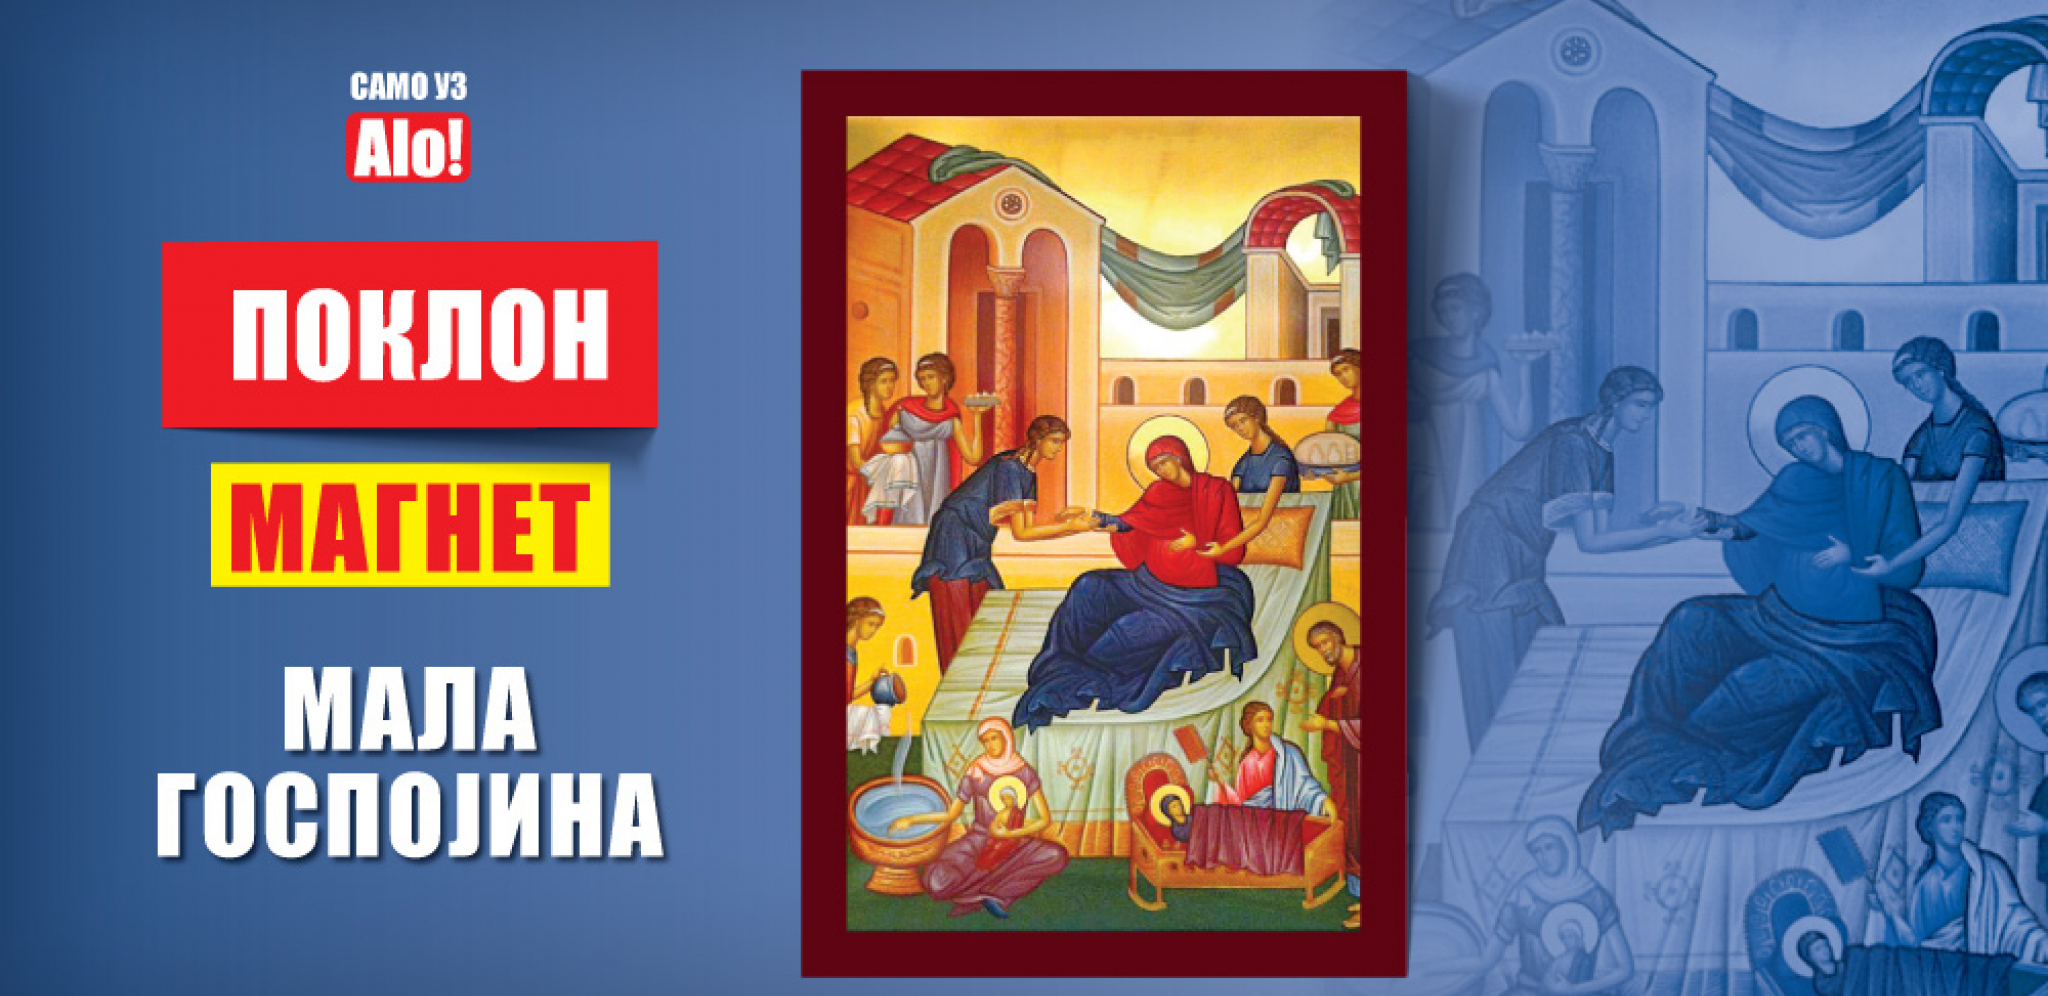 POKLON Alo! svojim čitaocima 21. septembra poklanja magnet rođenje Presvete Bogorodic